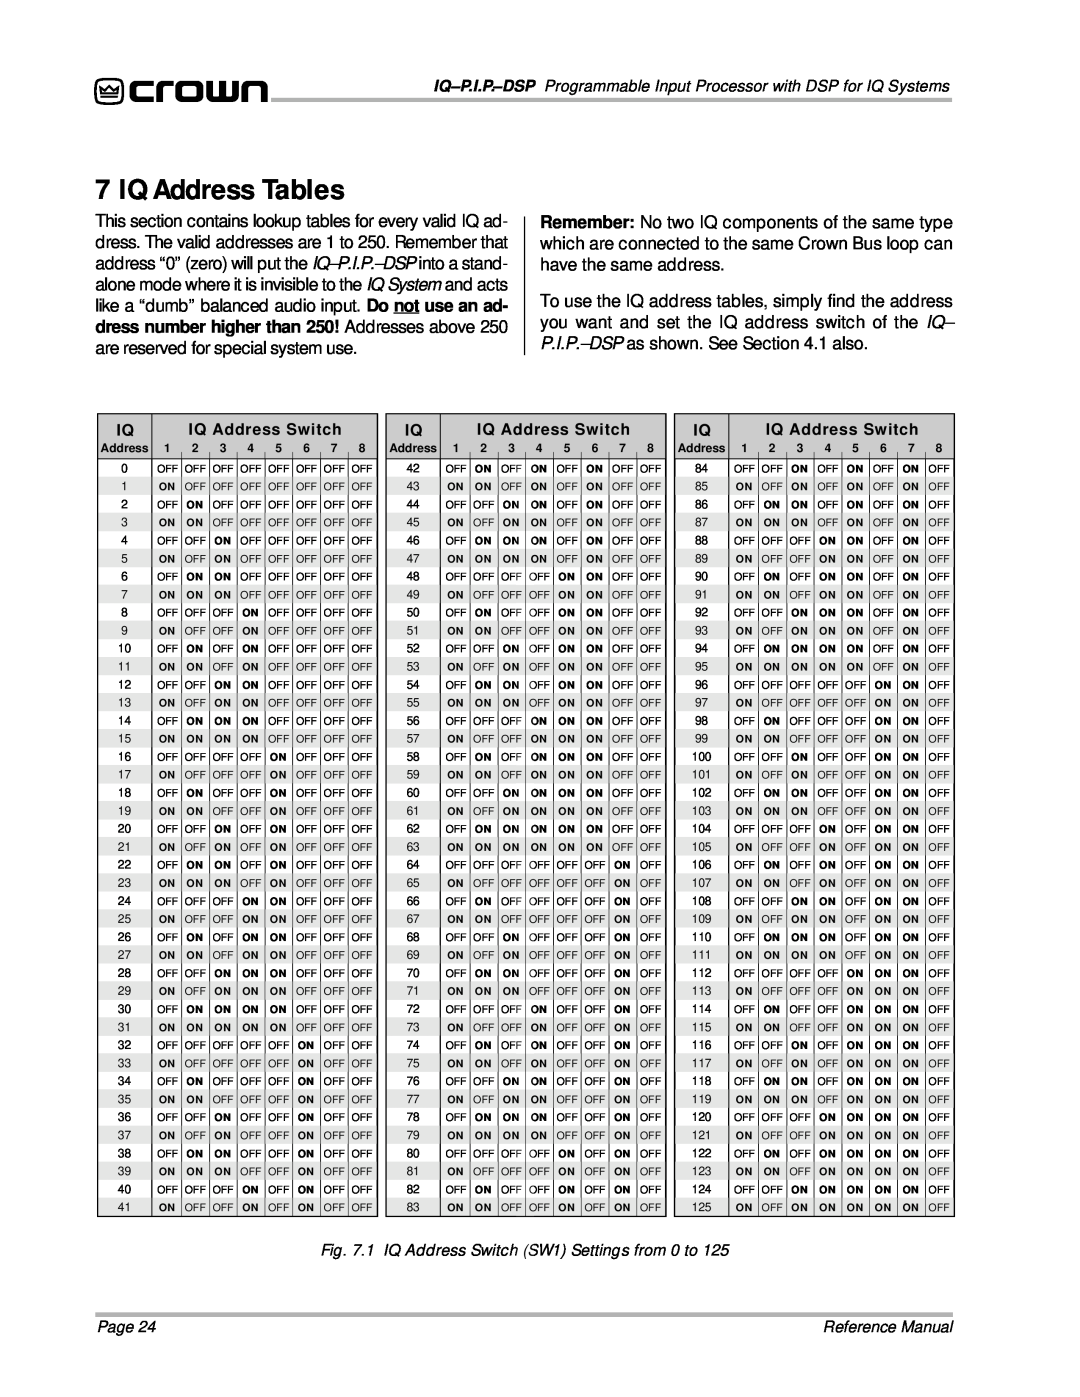 Crown Audio IQ P.I.P.-DSP manual IQ Address Tables, IQ Address Switch 